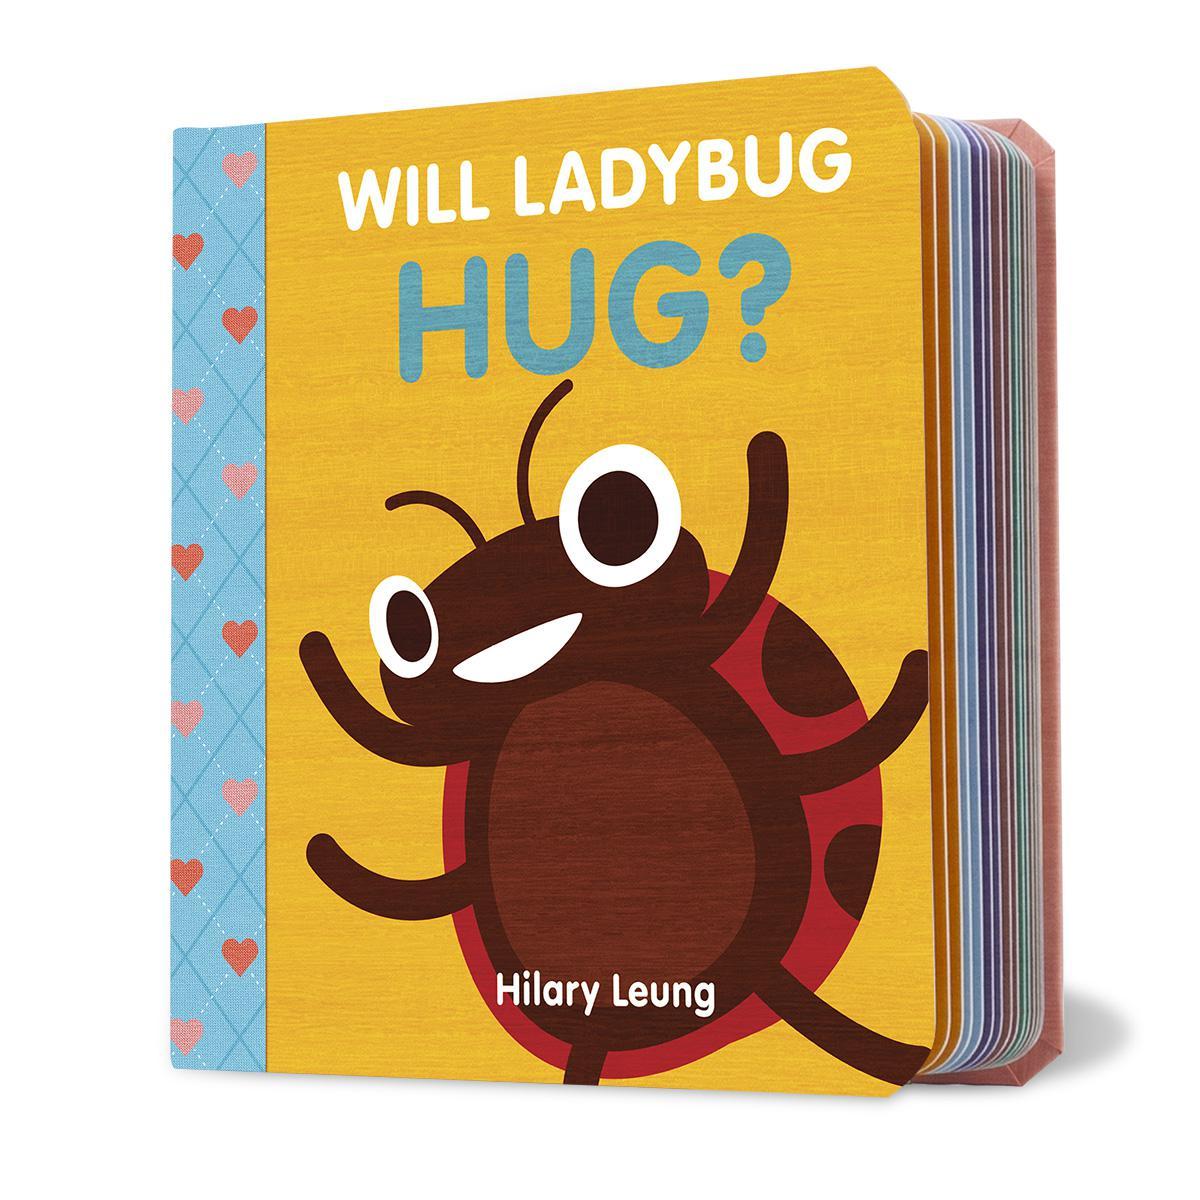  Will Ladybug Hug? 